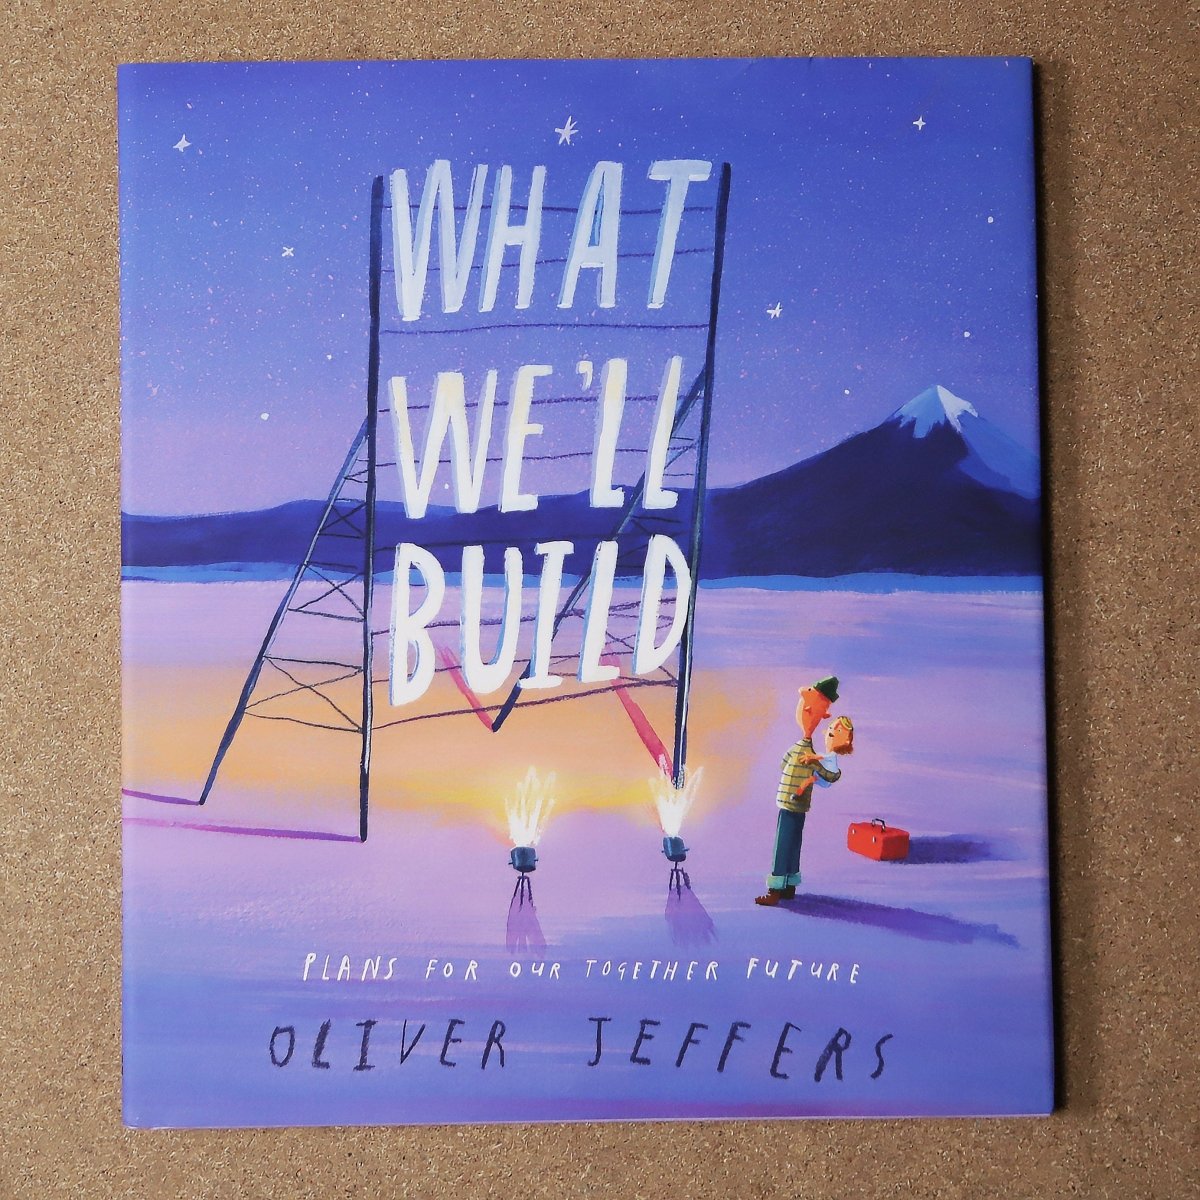 books | What We'll Build | La Romi